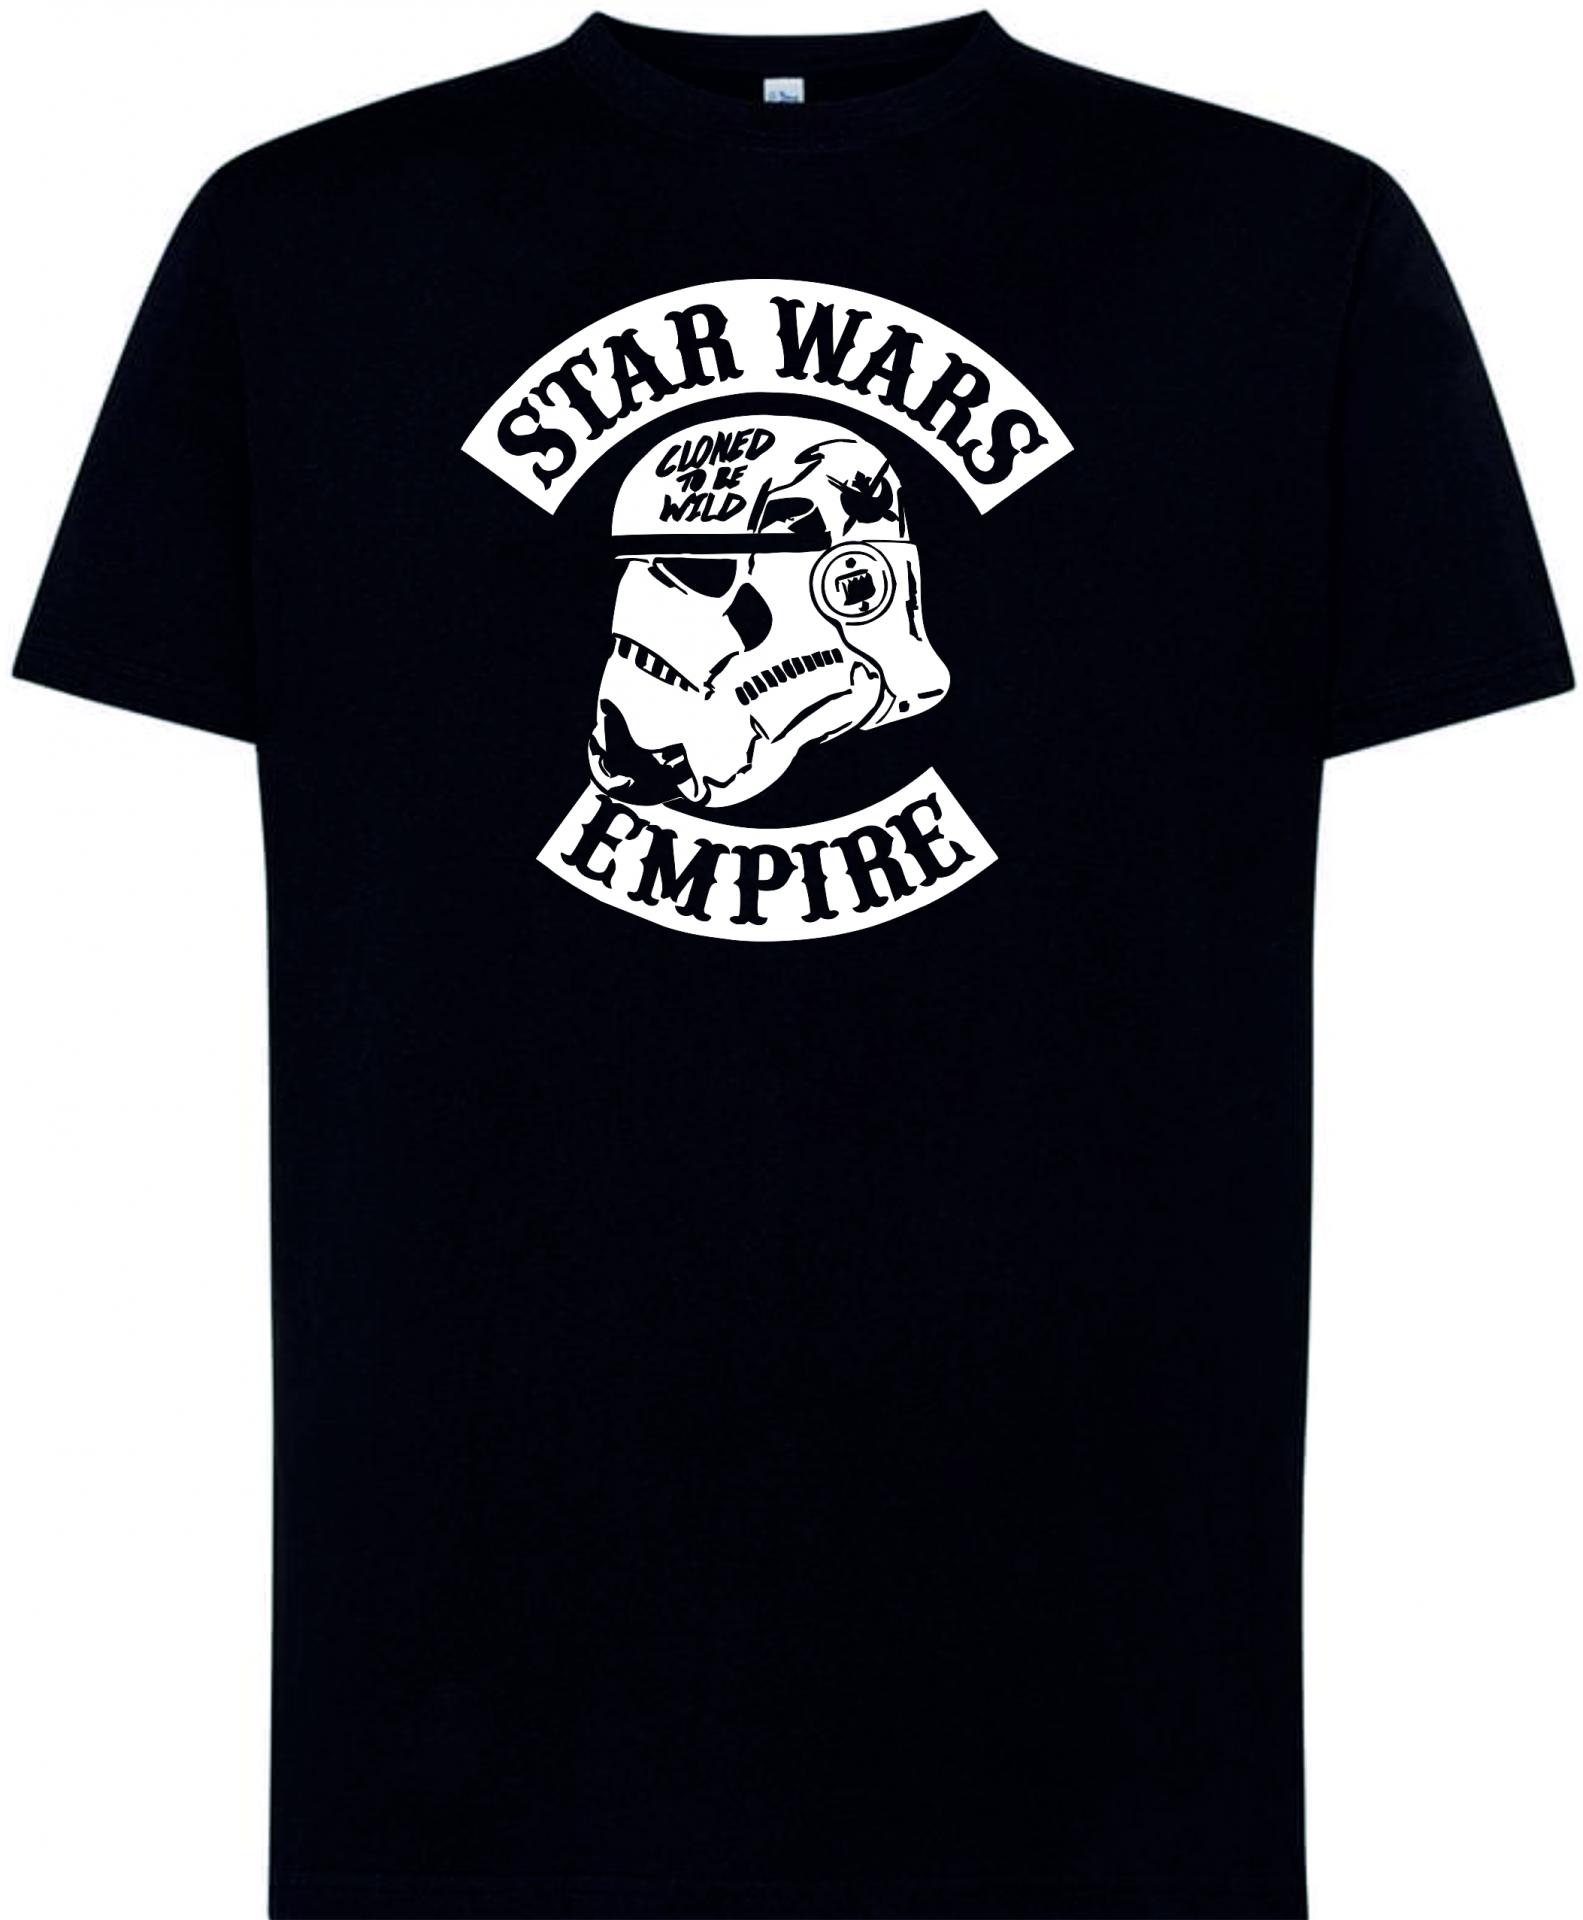 Camiseta - Sons Star Wars